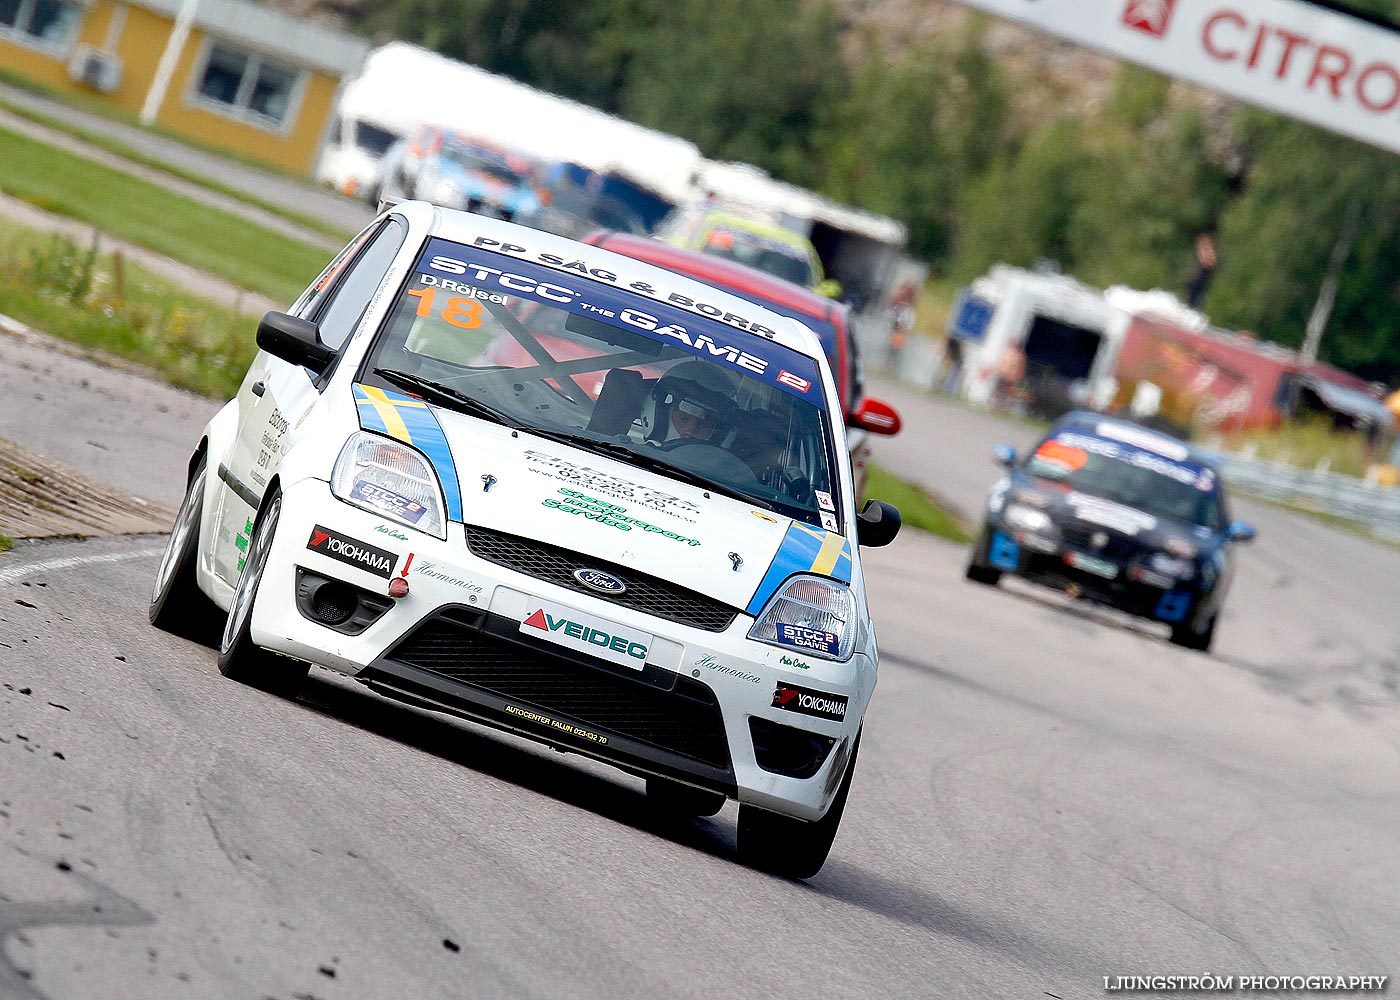 SSK Raceweek,mix,Kinnekulle Ring,Götene,Sverige,Motorsport,,2011,44491